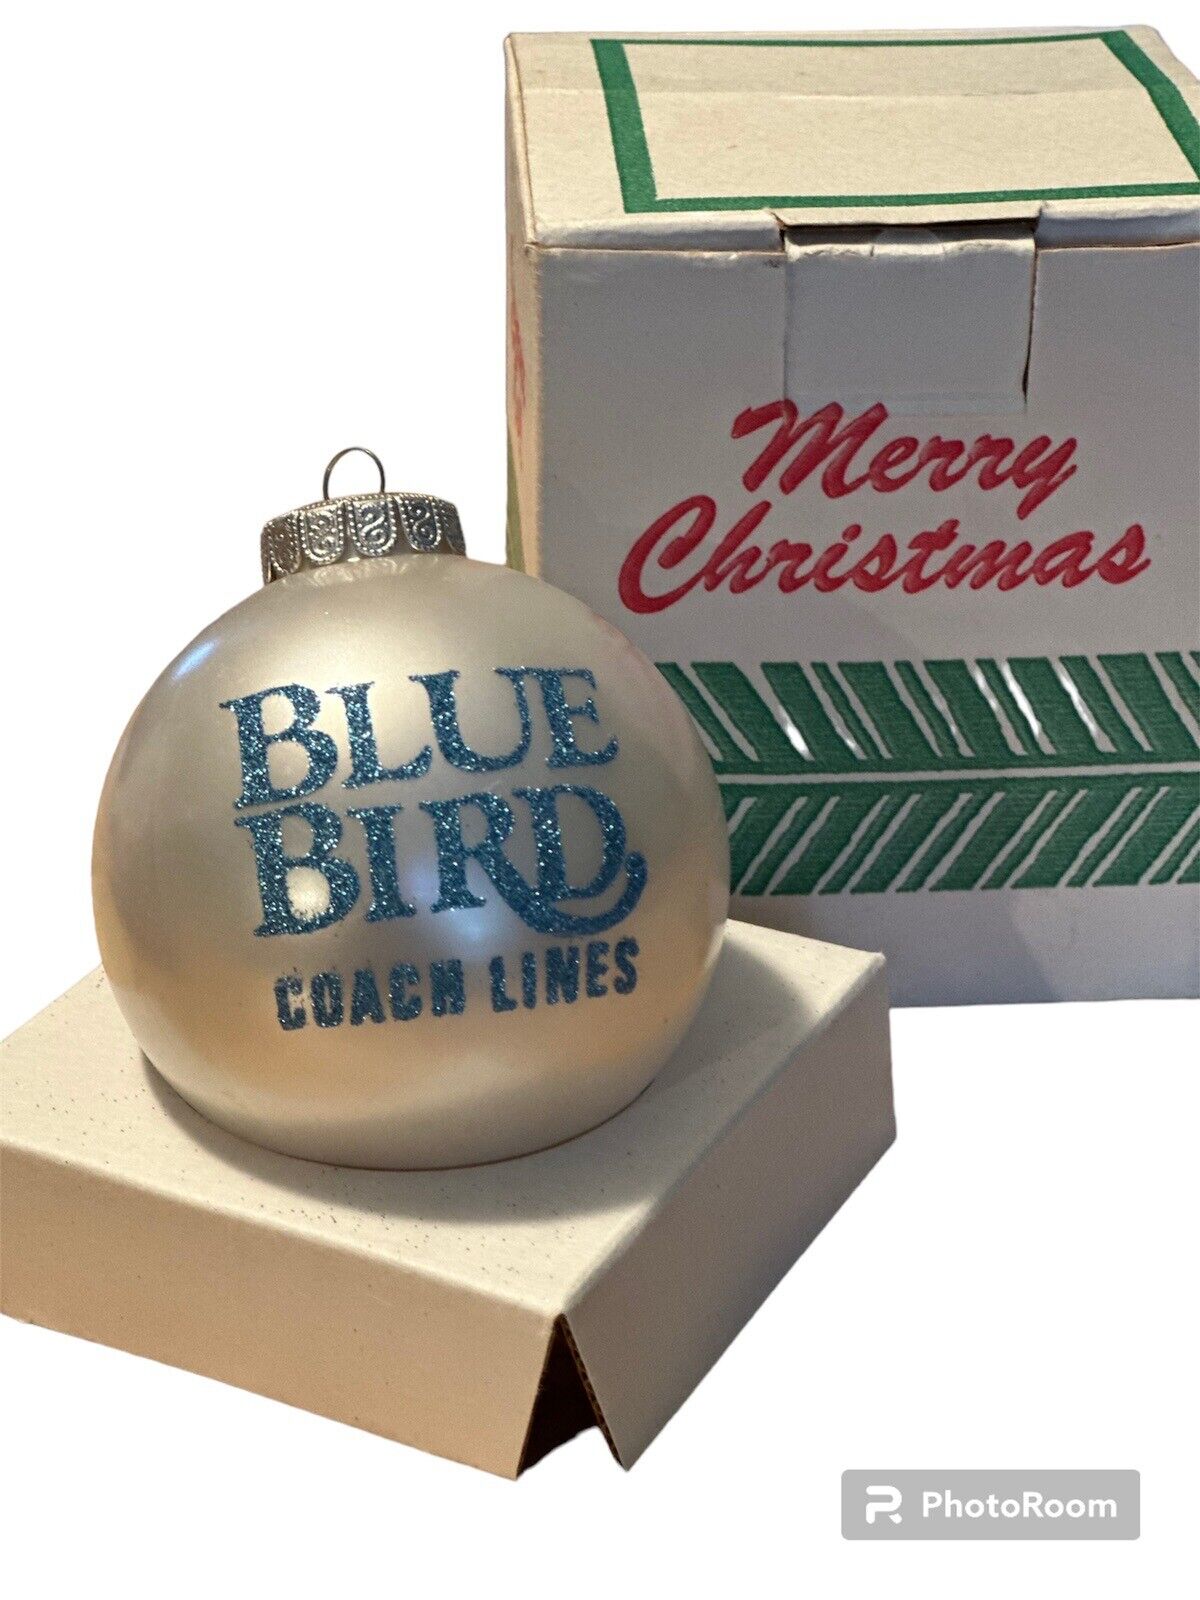 Vintage Blue Bird Coach Lines Bus Transportation Christmas Ornament Barcana